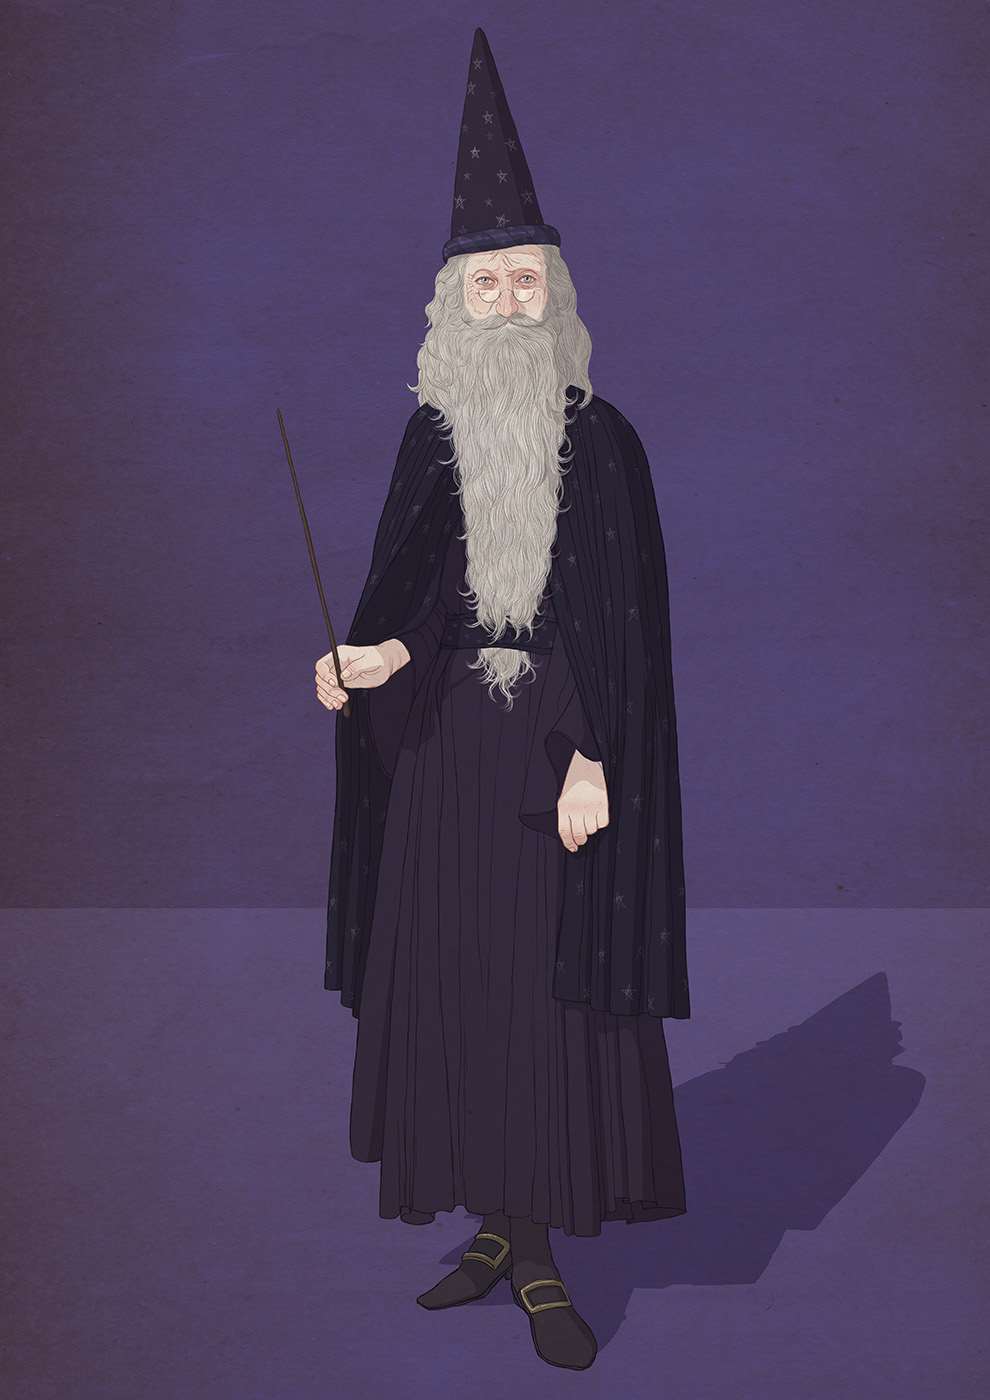 Richard Wilkinson, Harry Potter character illustration of Dumbledore